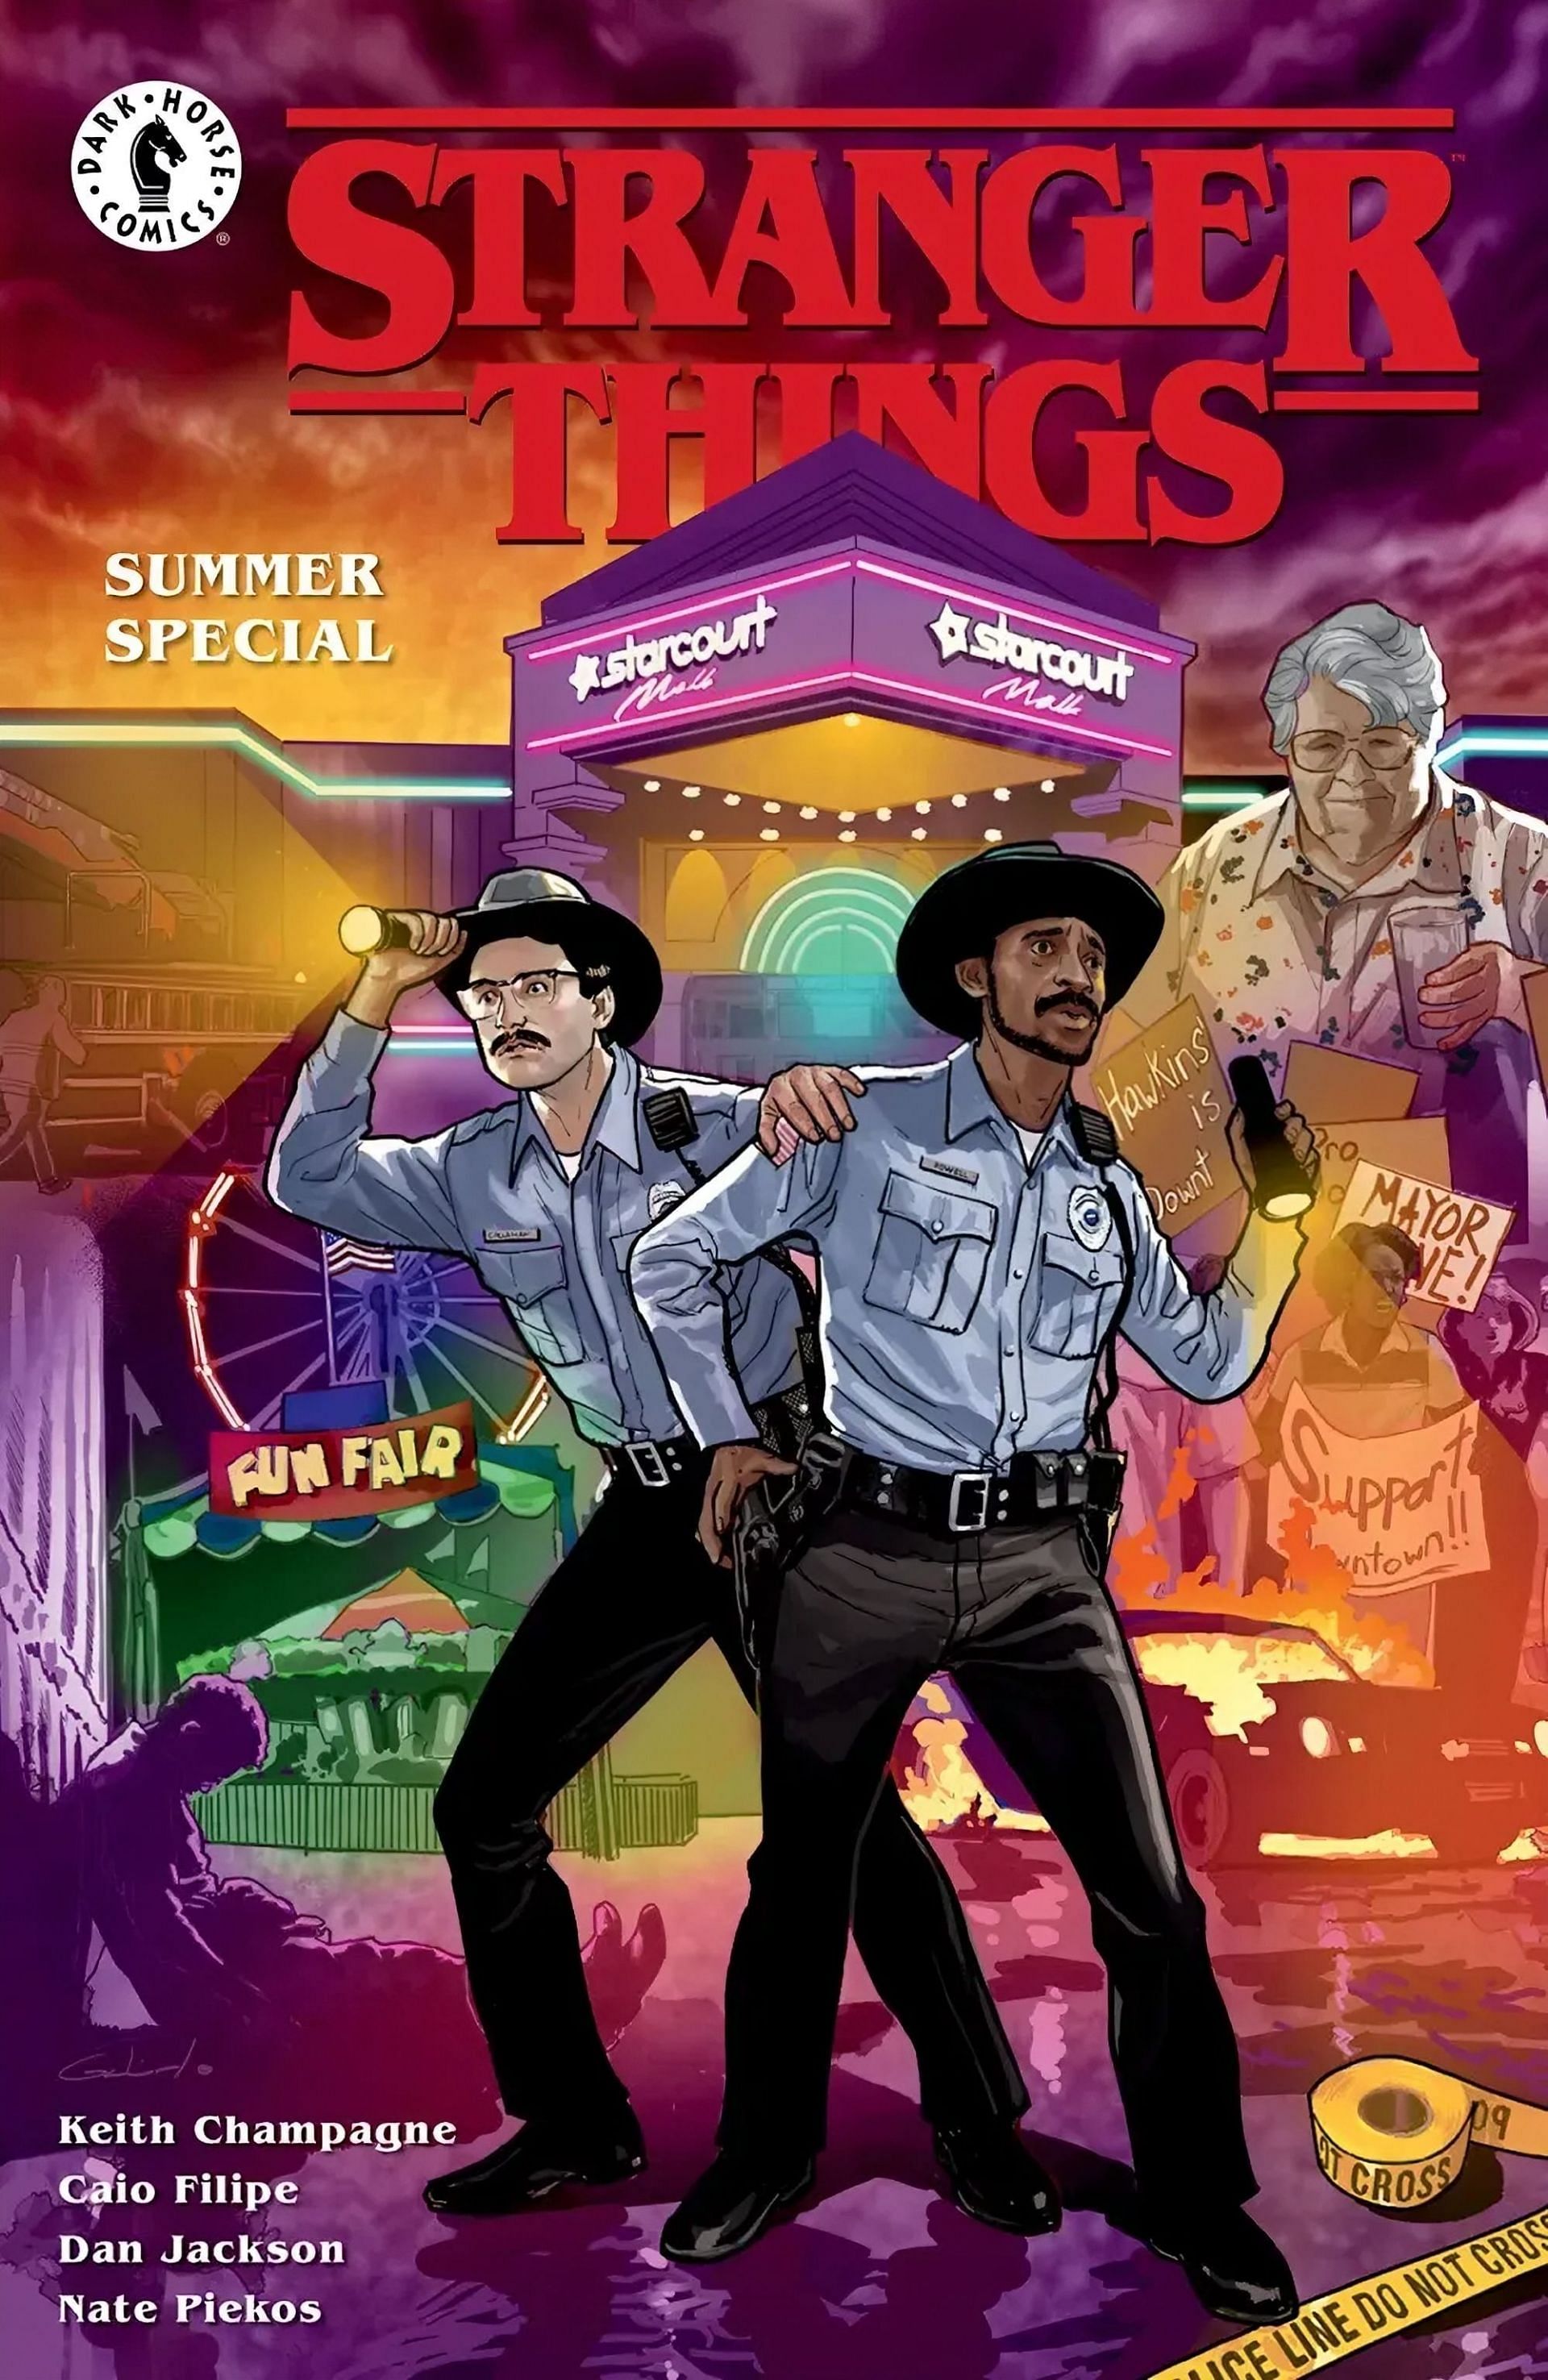 Cover of the comic (Image via Dark Horse Comics)